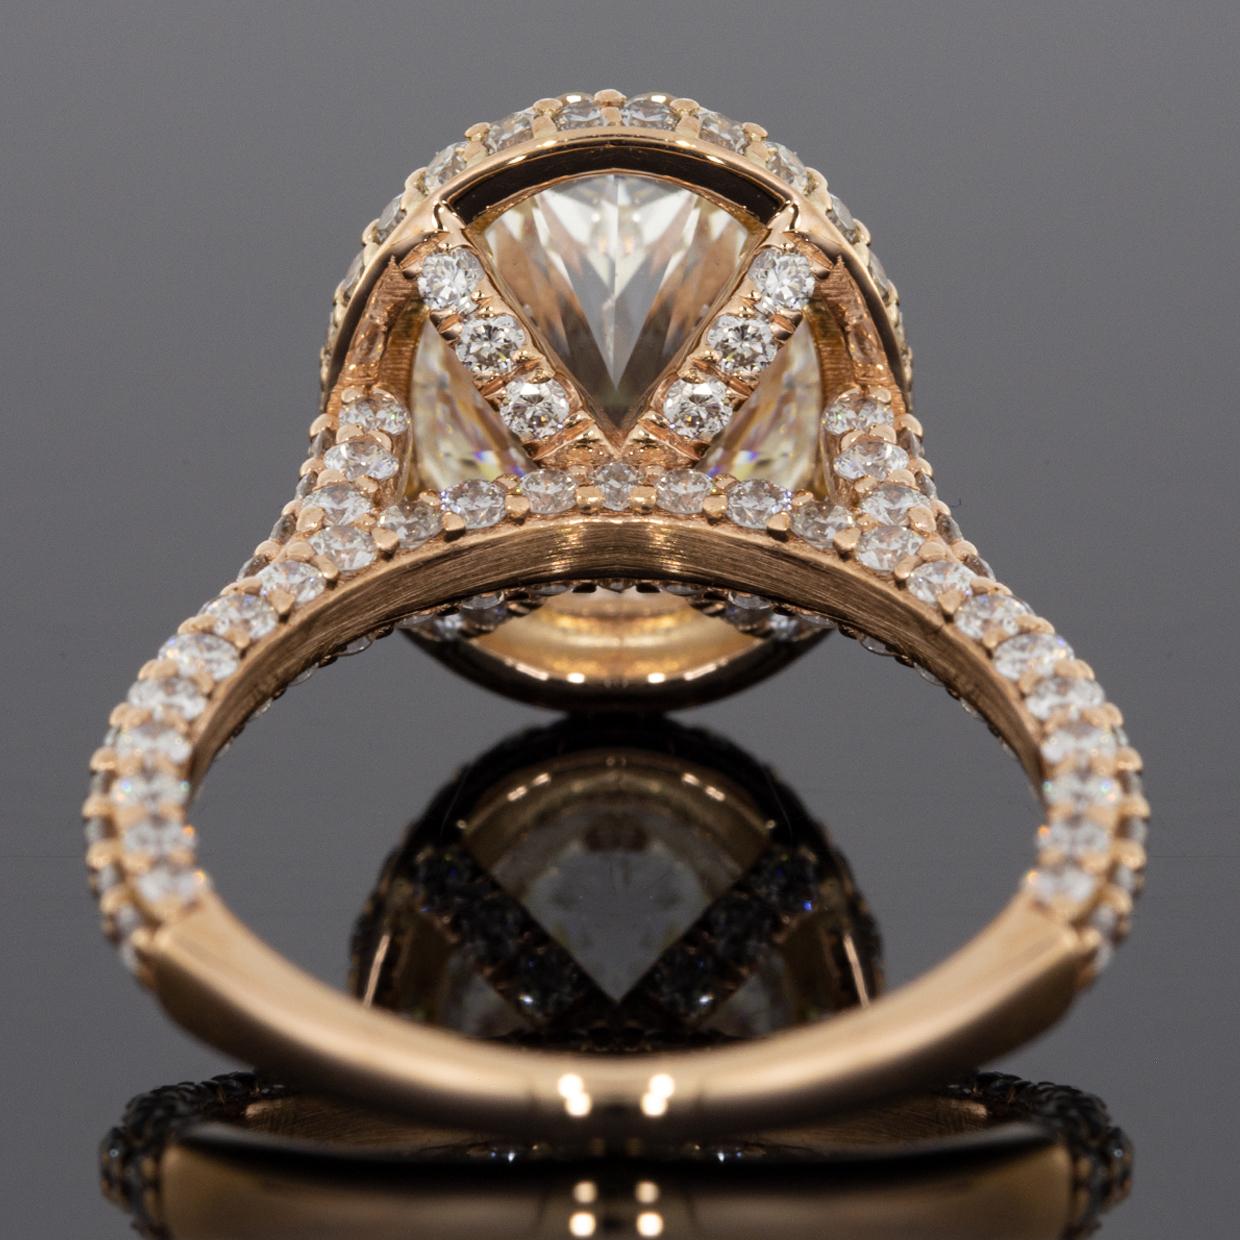 2 carat oval halo diamond ring